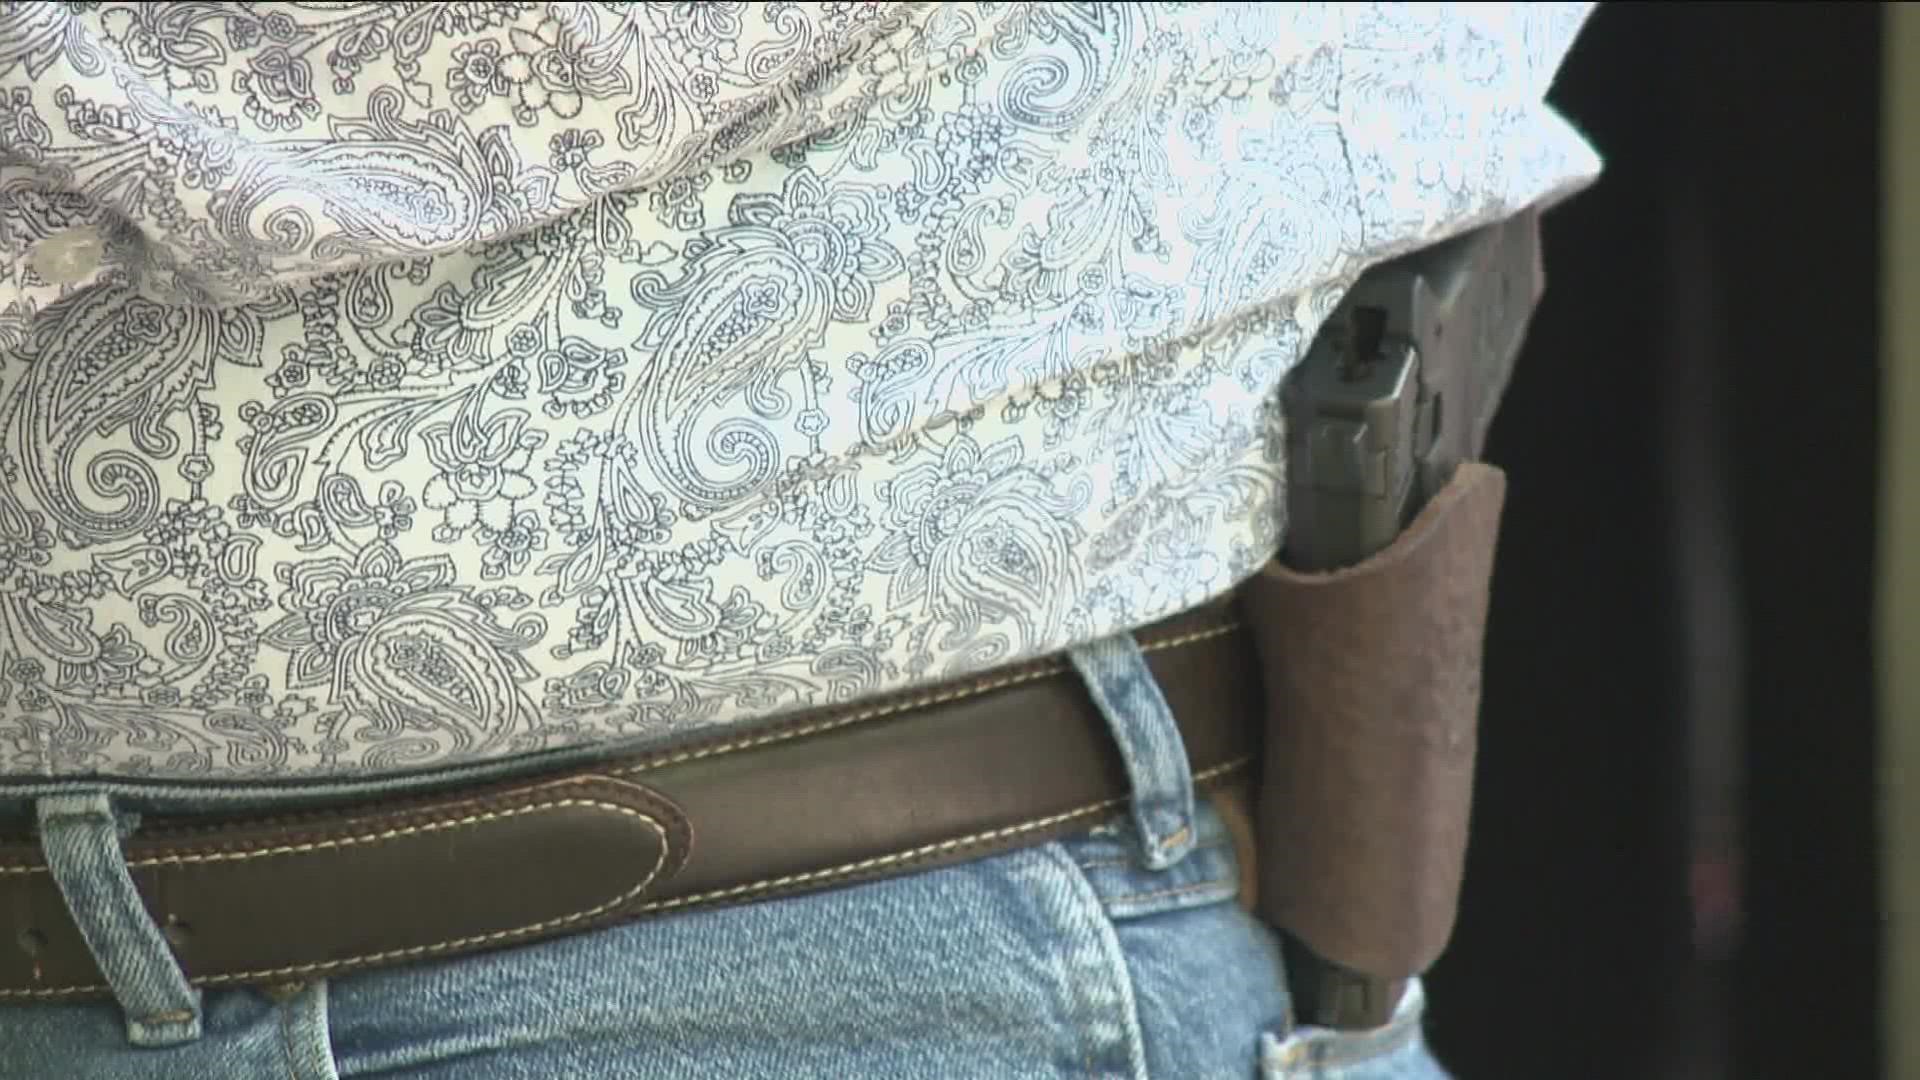 Georgia’s gun laws will get another look when the legislature convenes starting next week.